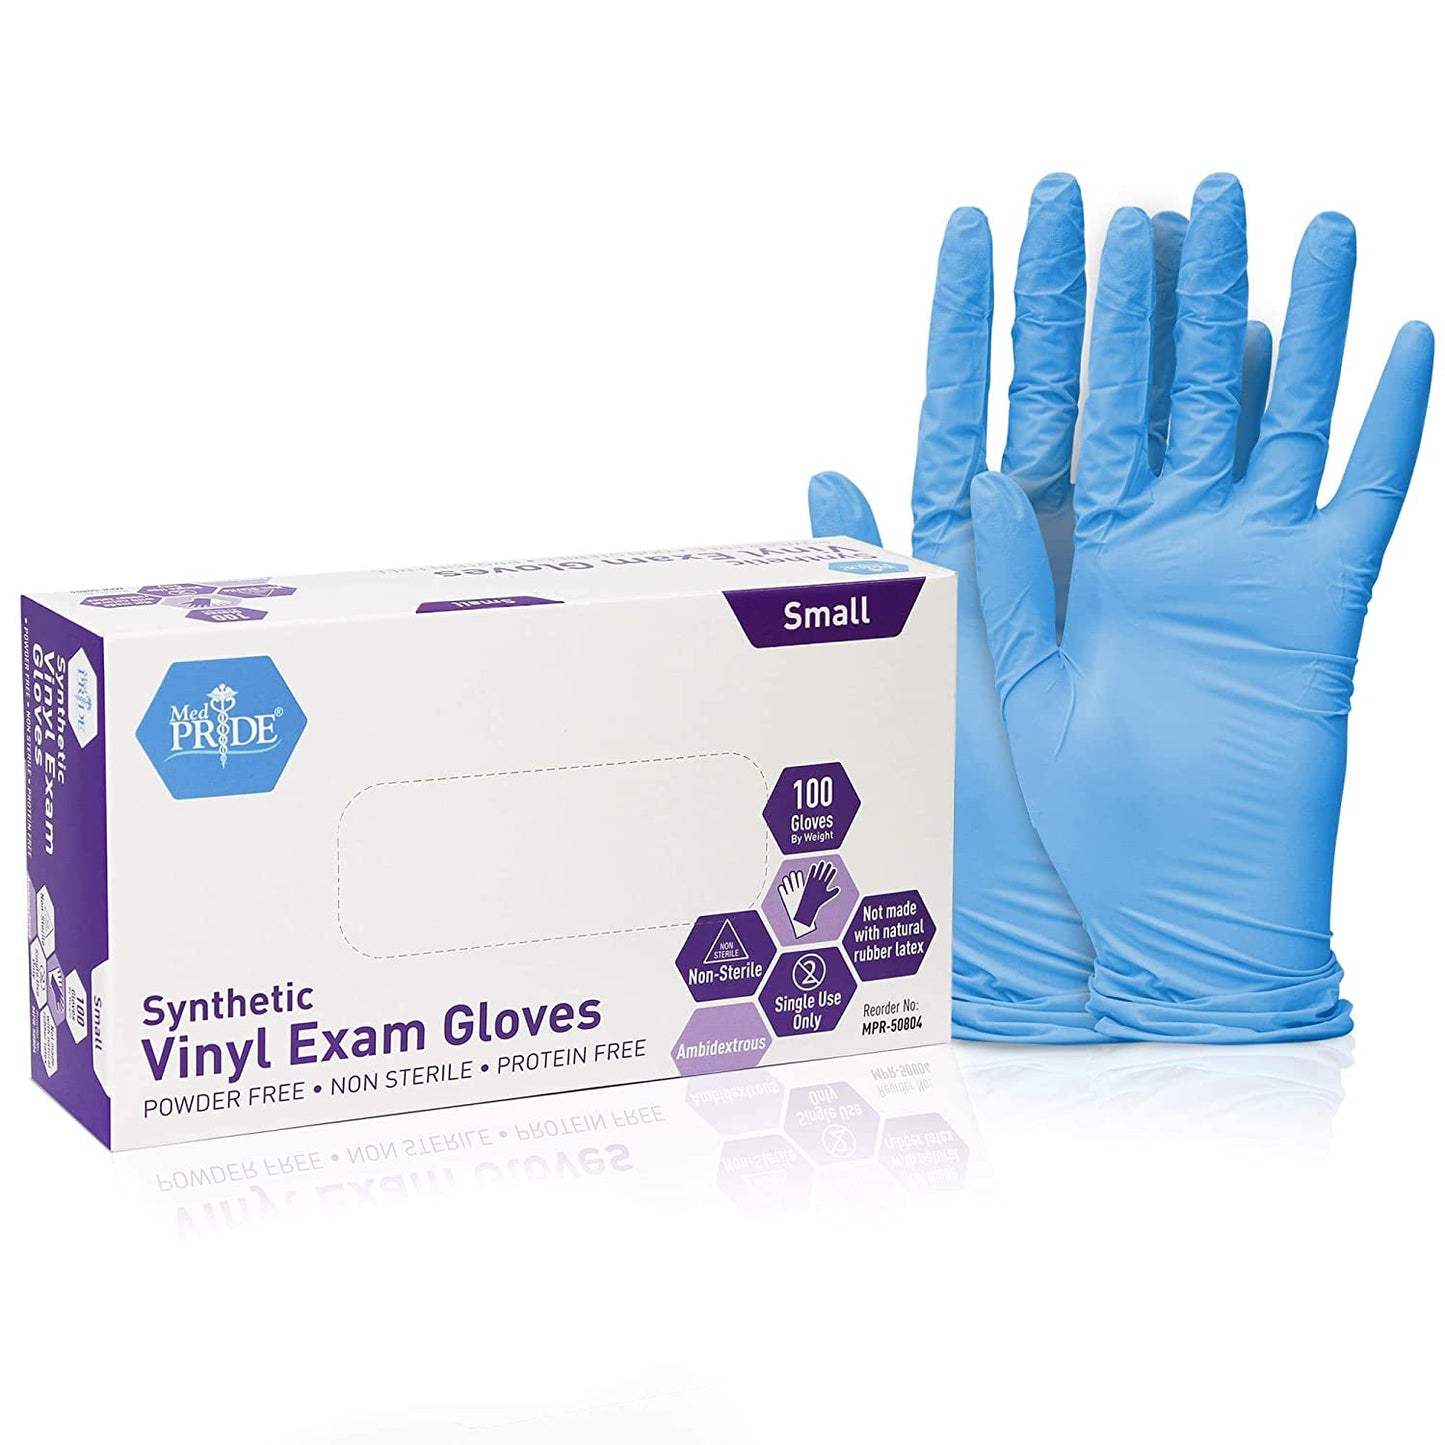 MedPride Synthetic Vinyl Exam Gloves